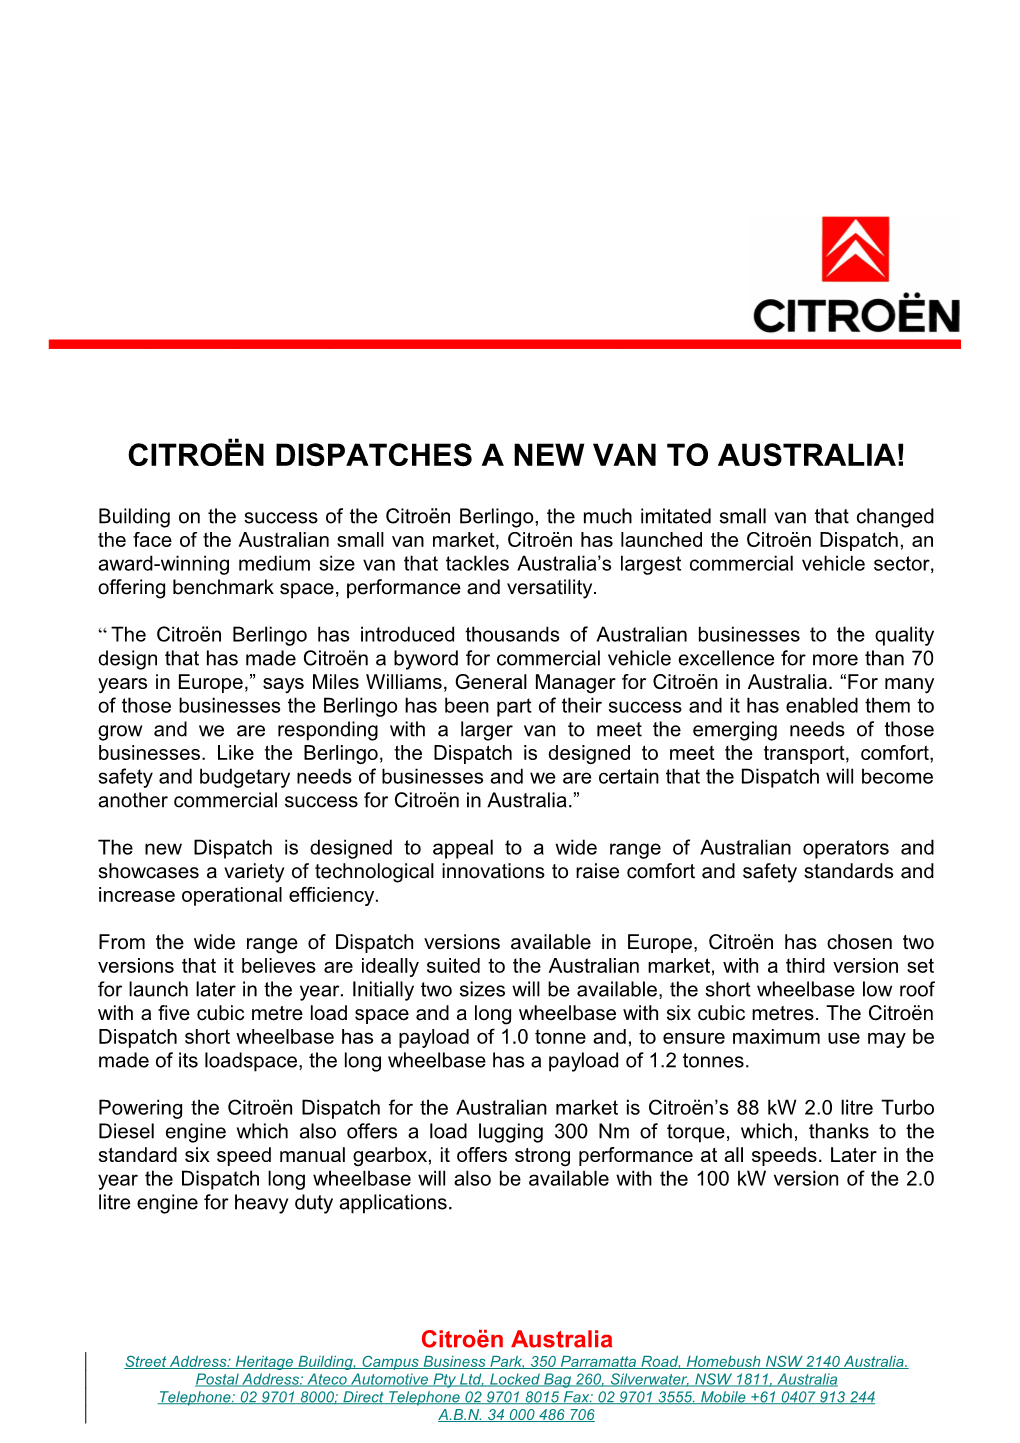 Citroën Dispatches a New Van to Australia!